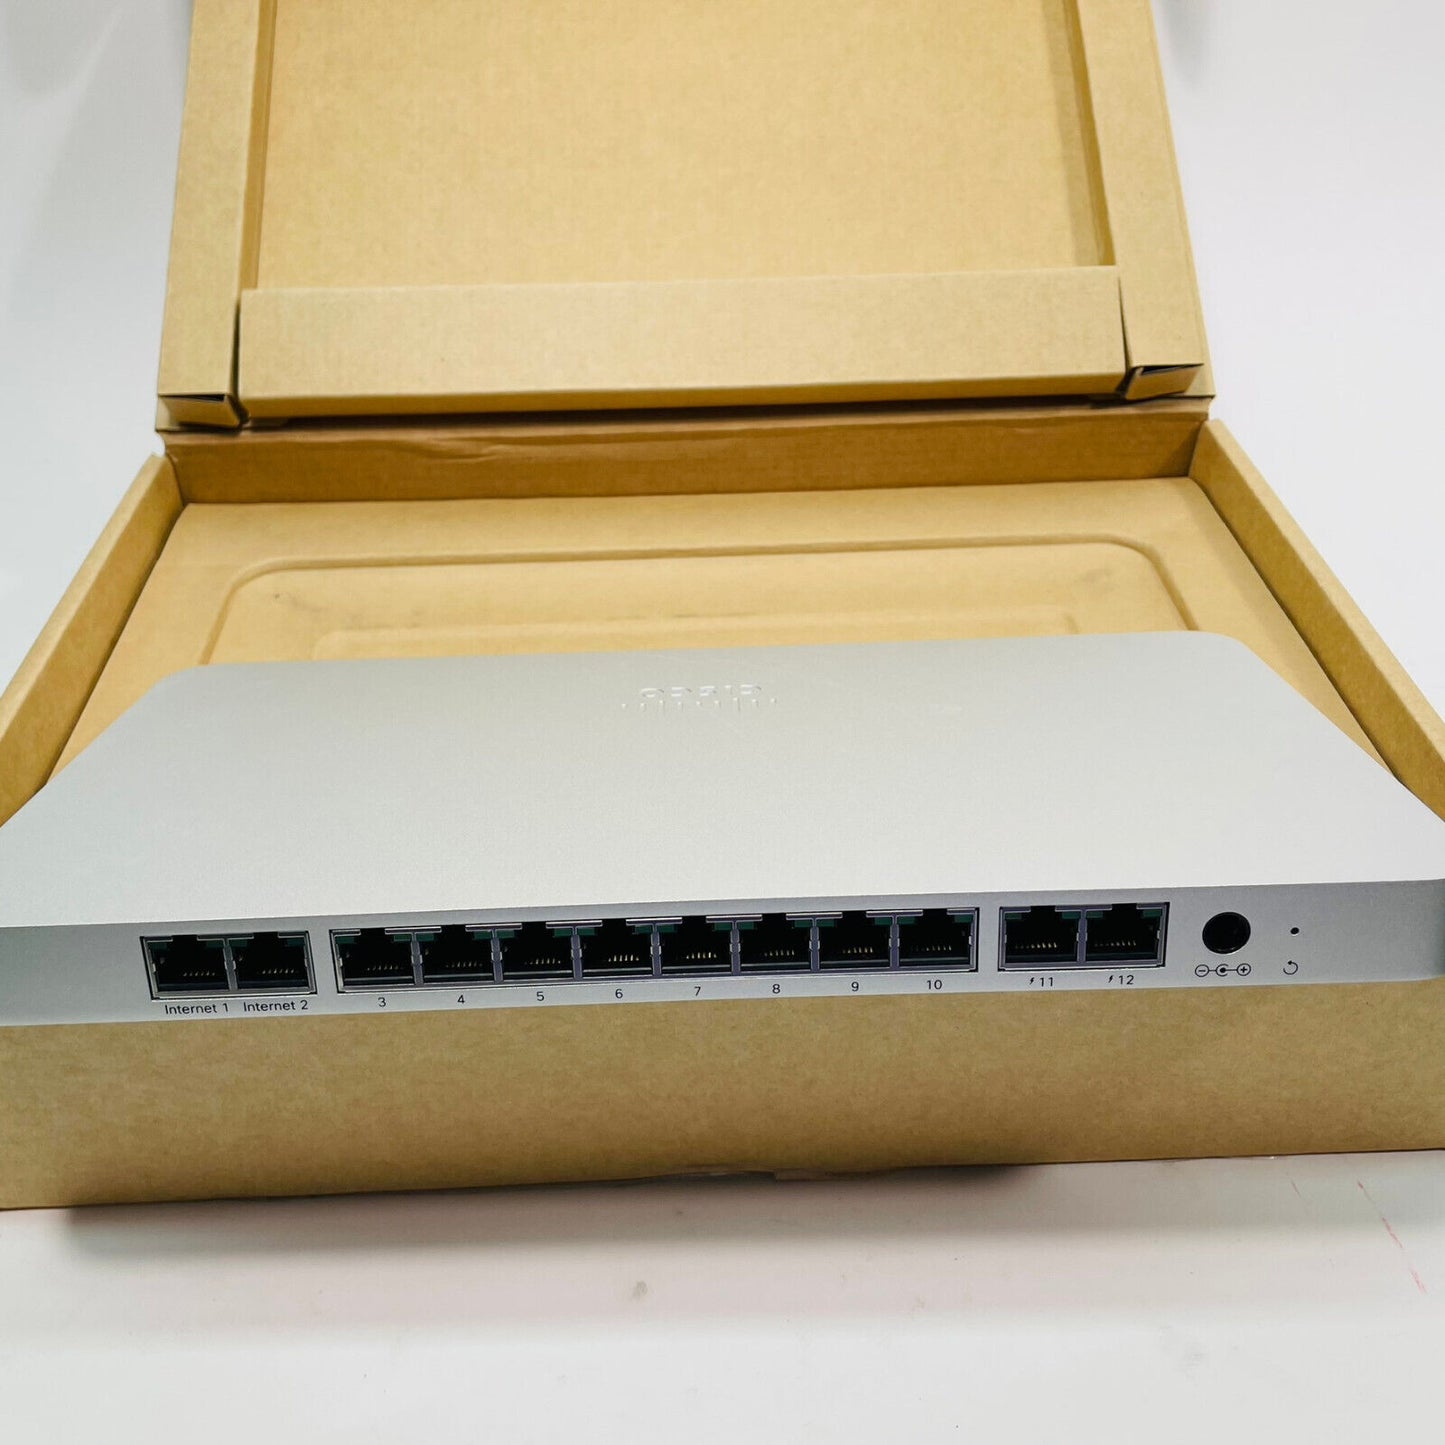 New Cisco Meraki MX68-HW Router Security Firewall Appliance Unclaimed